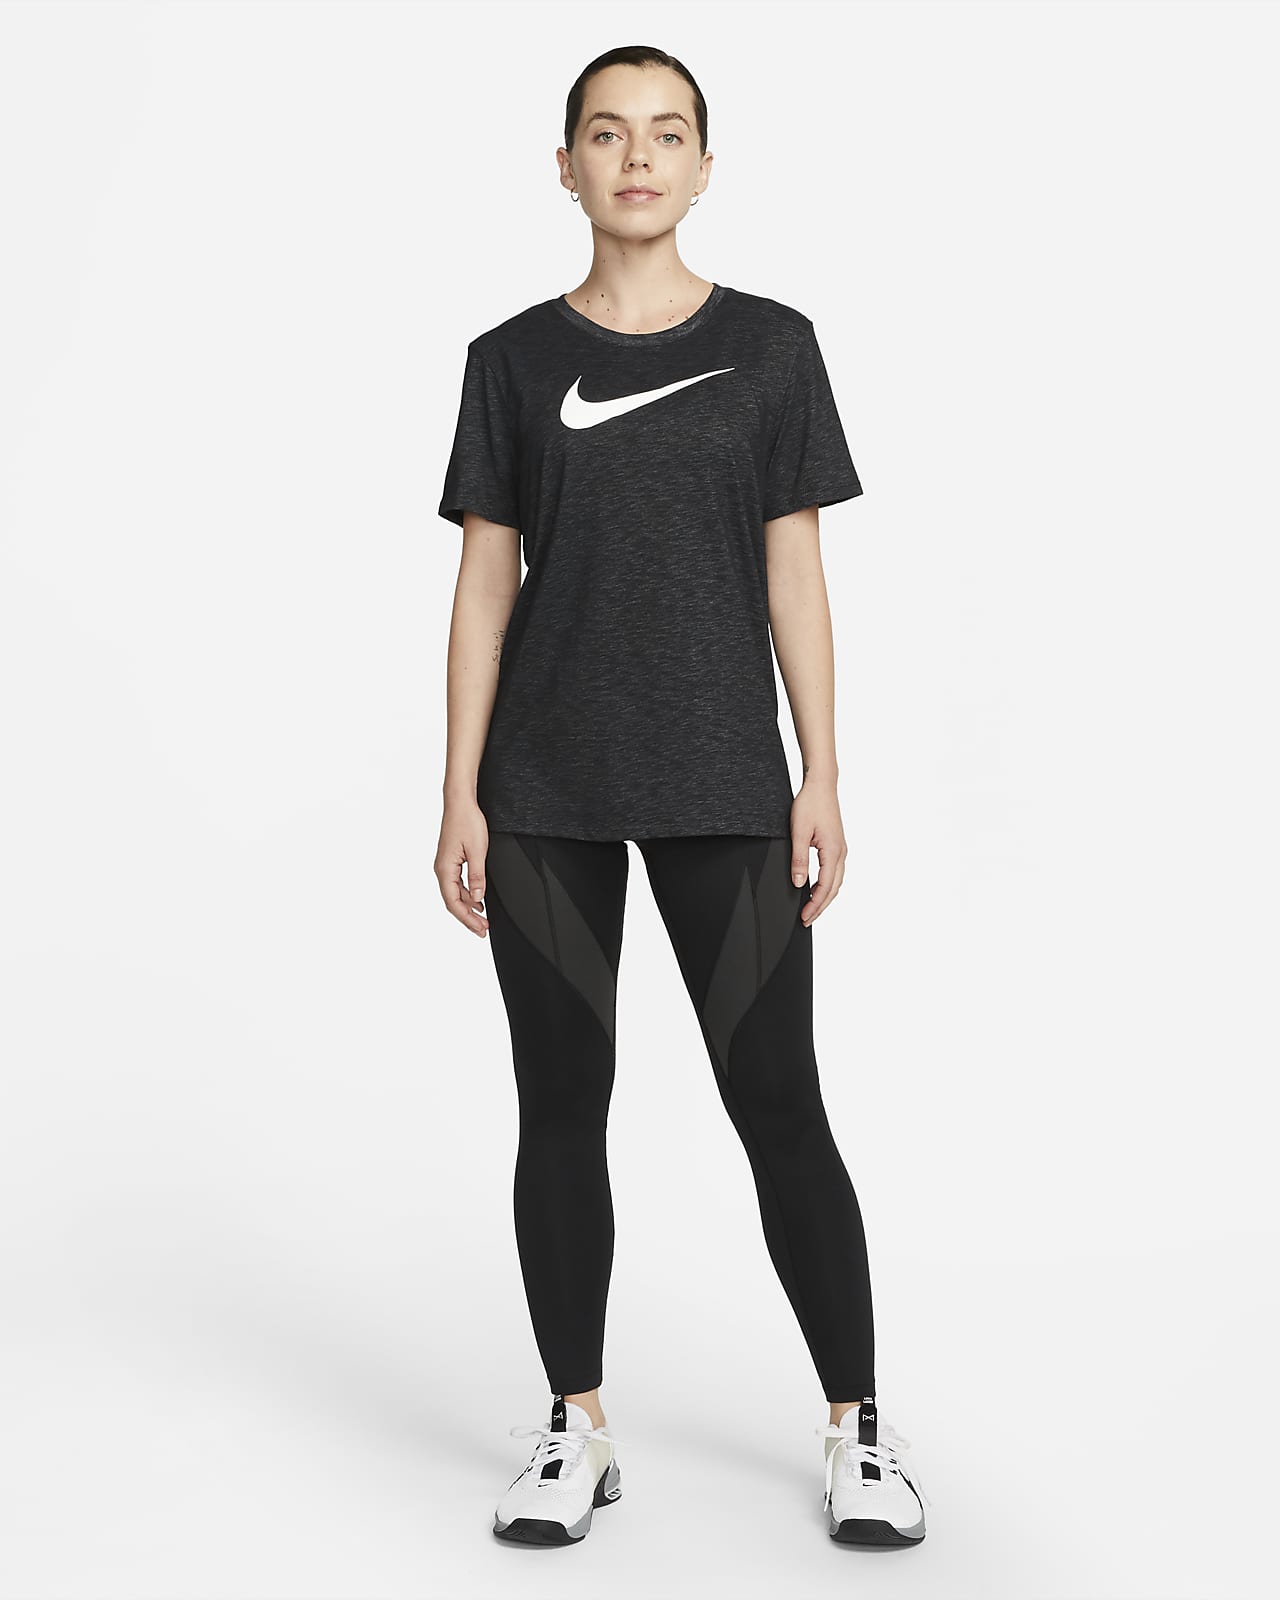 Nike Activewear Top Womens Medium Green Dri Fit Crew Neck Short